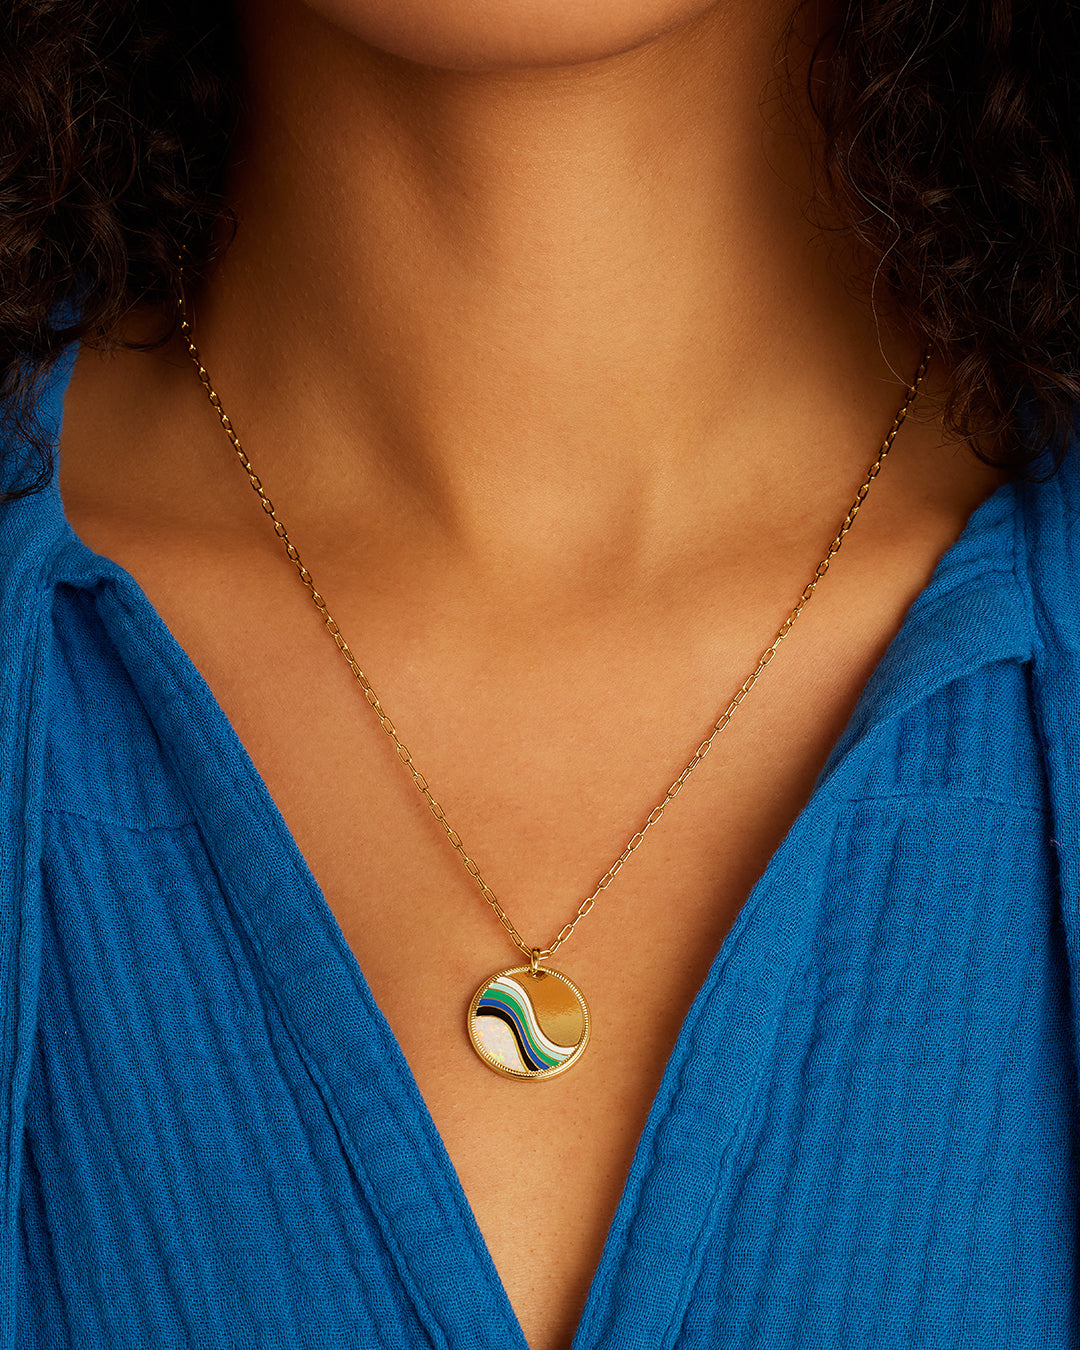 U7 Jewelry Heart Picture Locket Necklace For Women